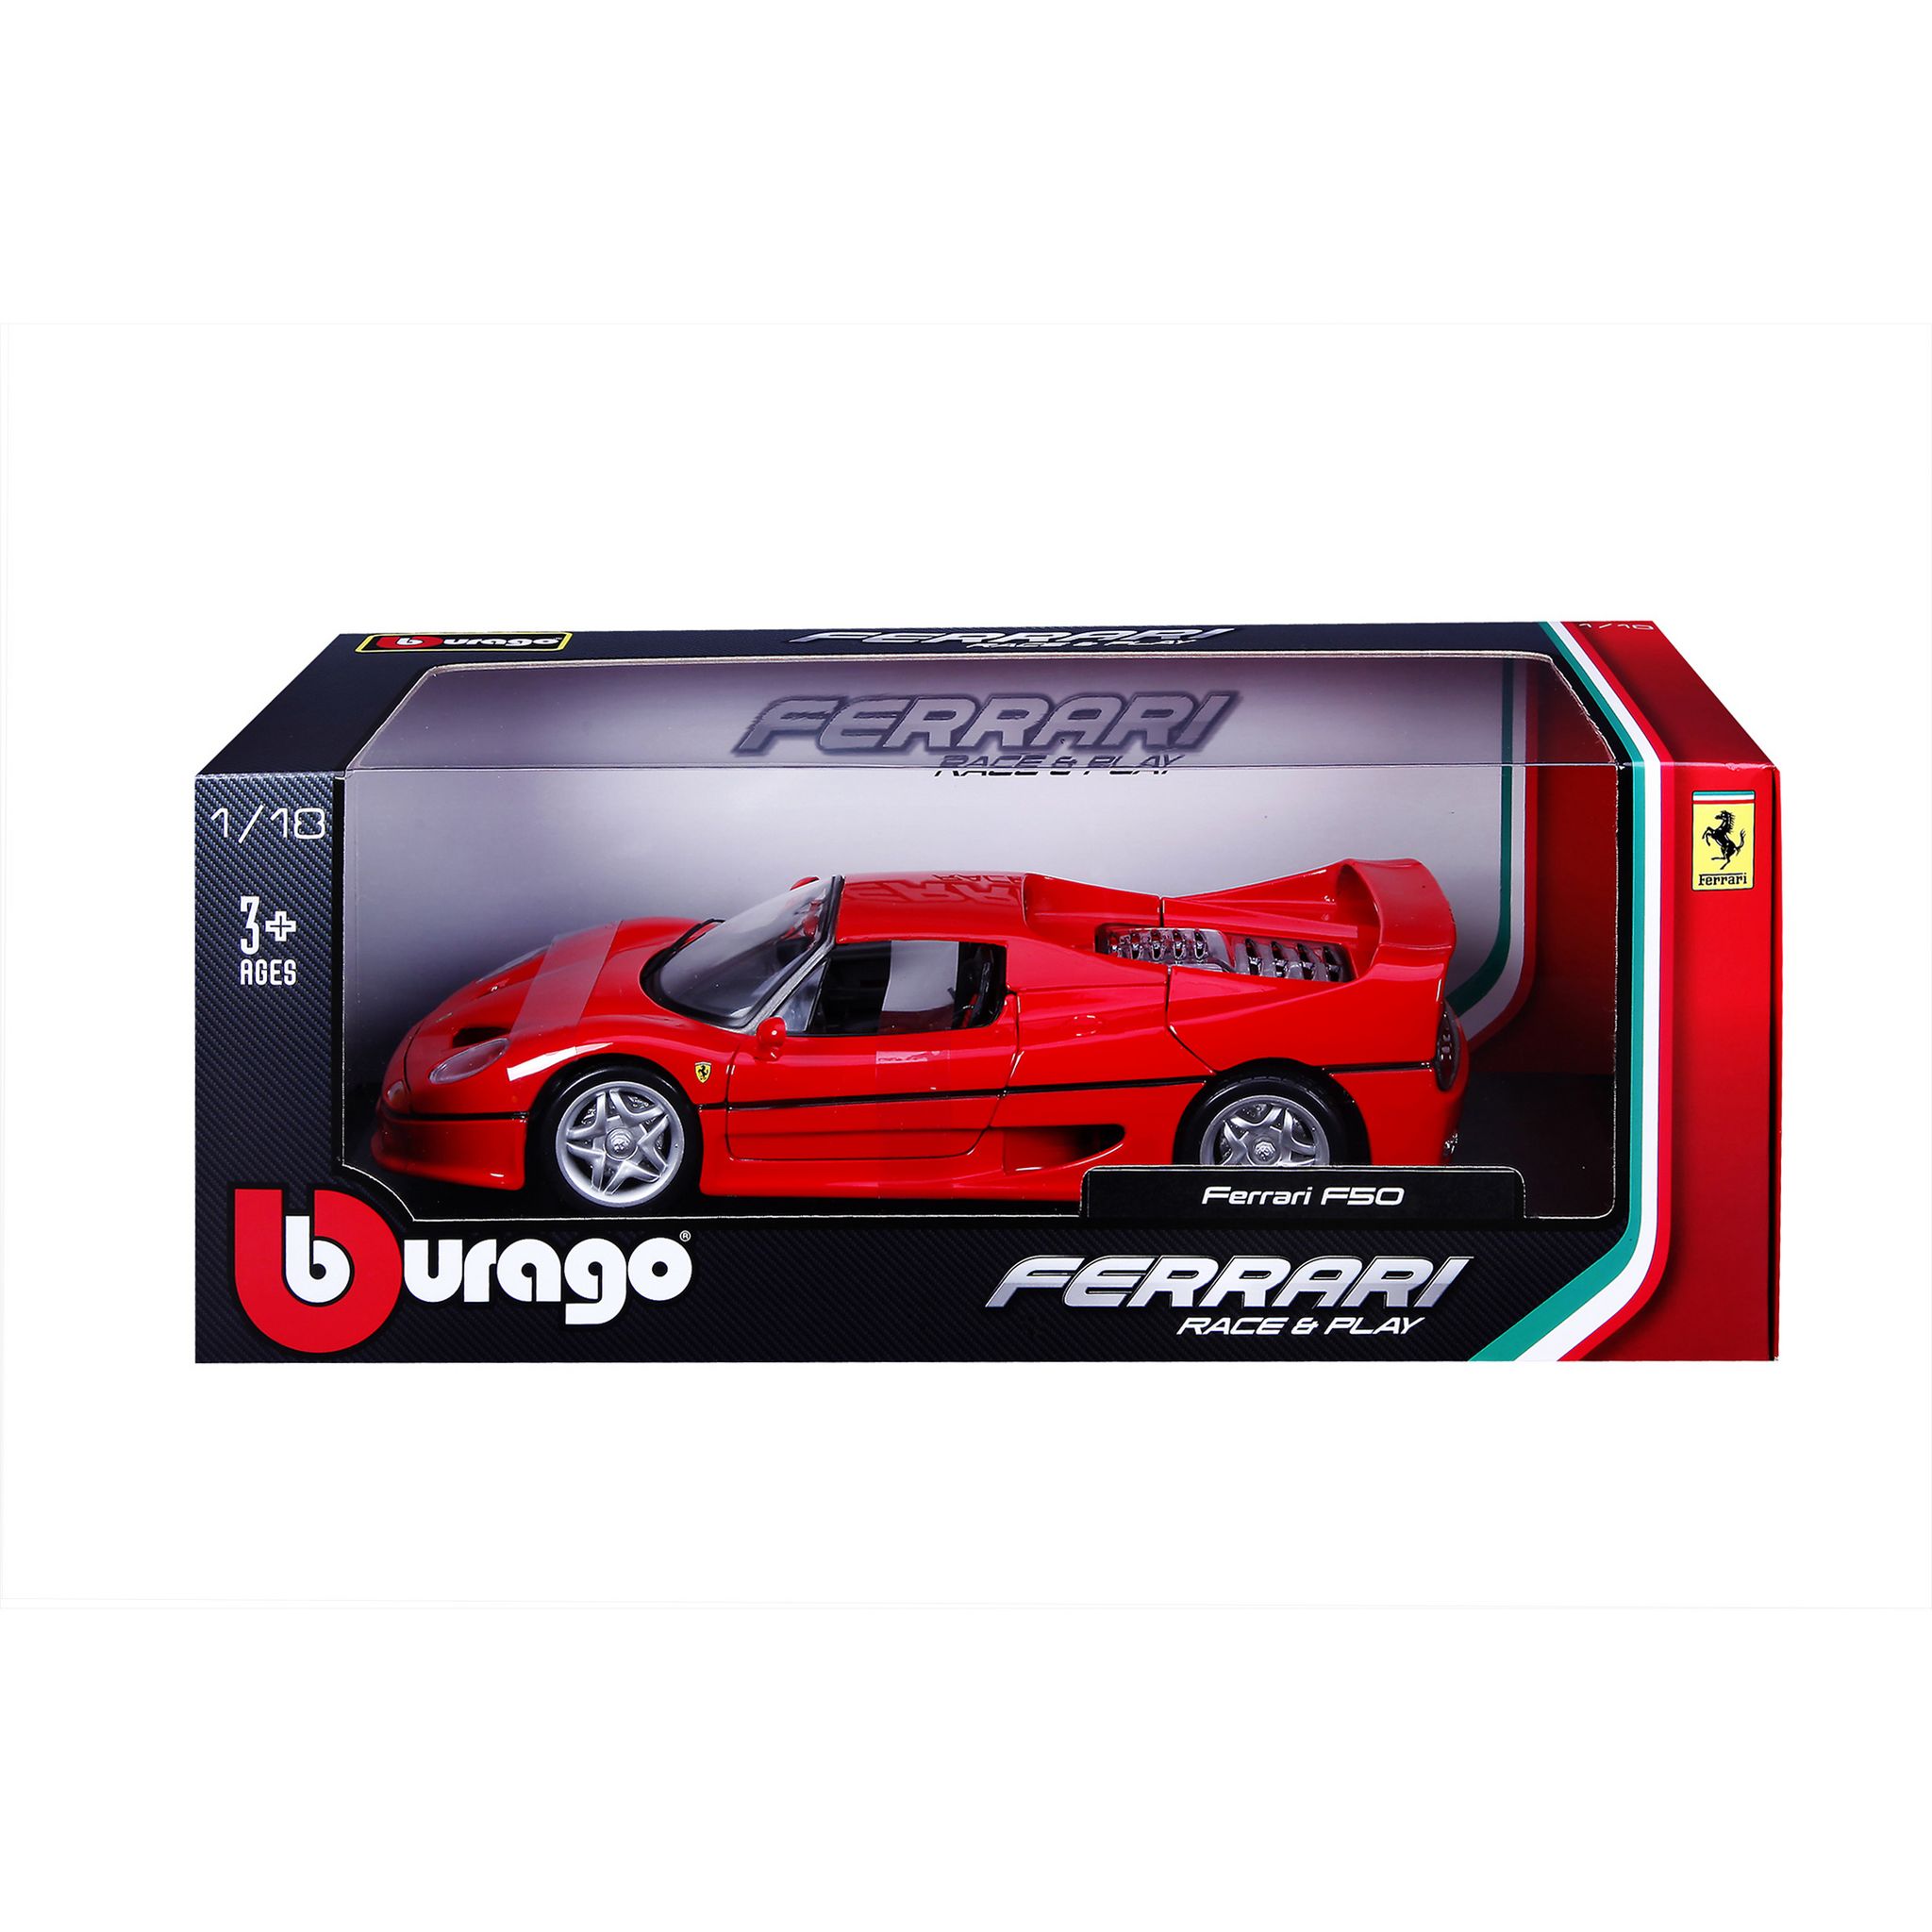 BURAGO Voiture Miniature Ferrari Monza SP1 pas cher 